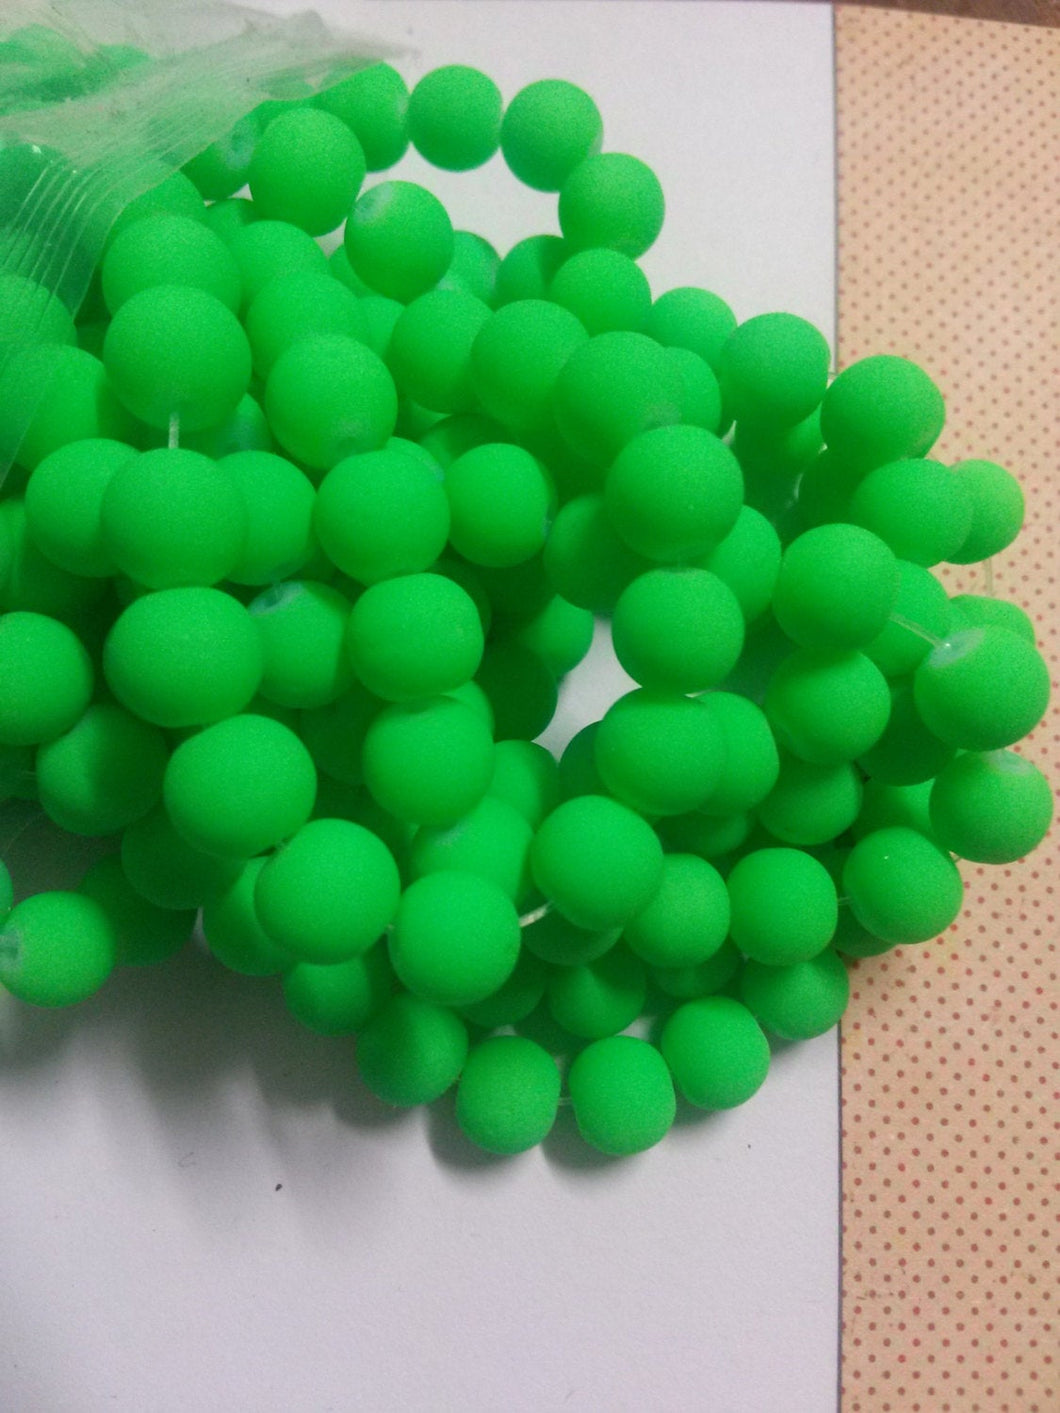 Bulk Beads Neon Green Beads Rubberized Glass Beads Neon Beads 8mm Beads Wholesale Beads 2100 pieces 20 strands 32